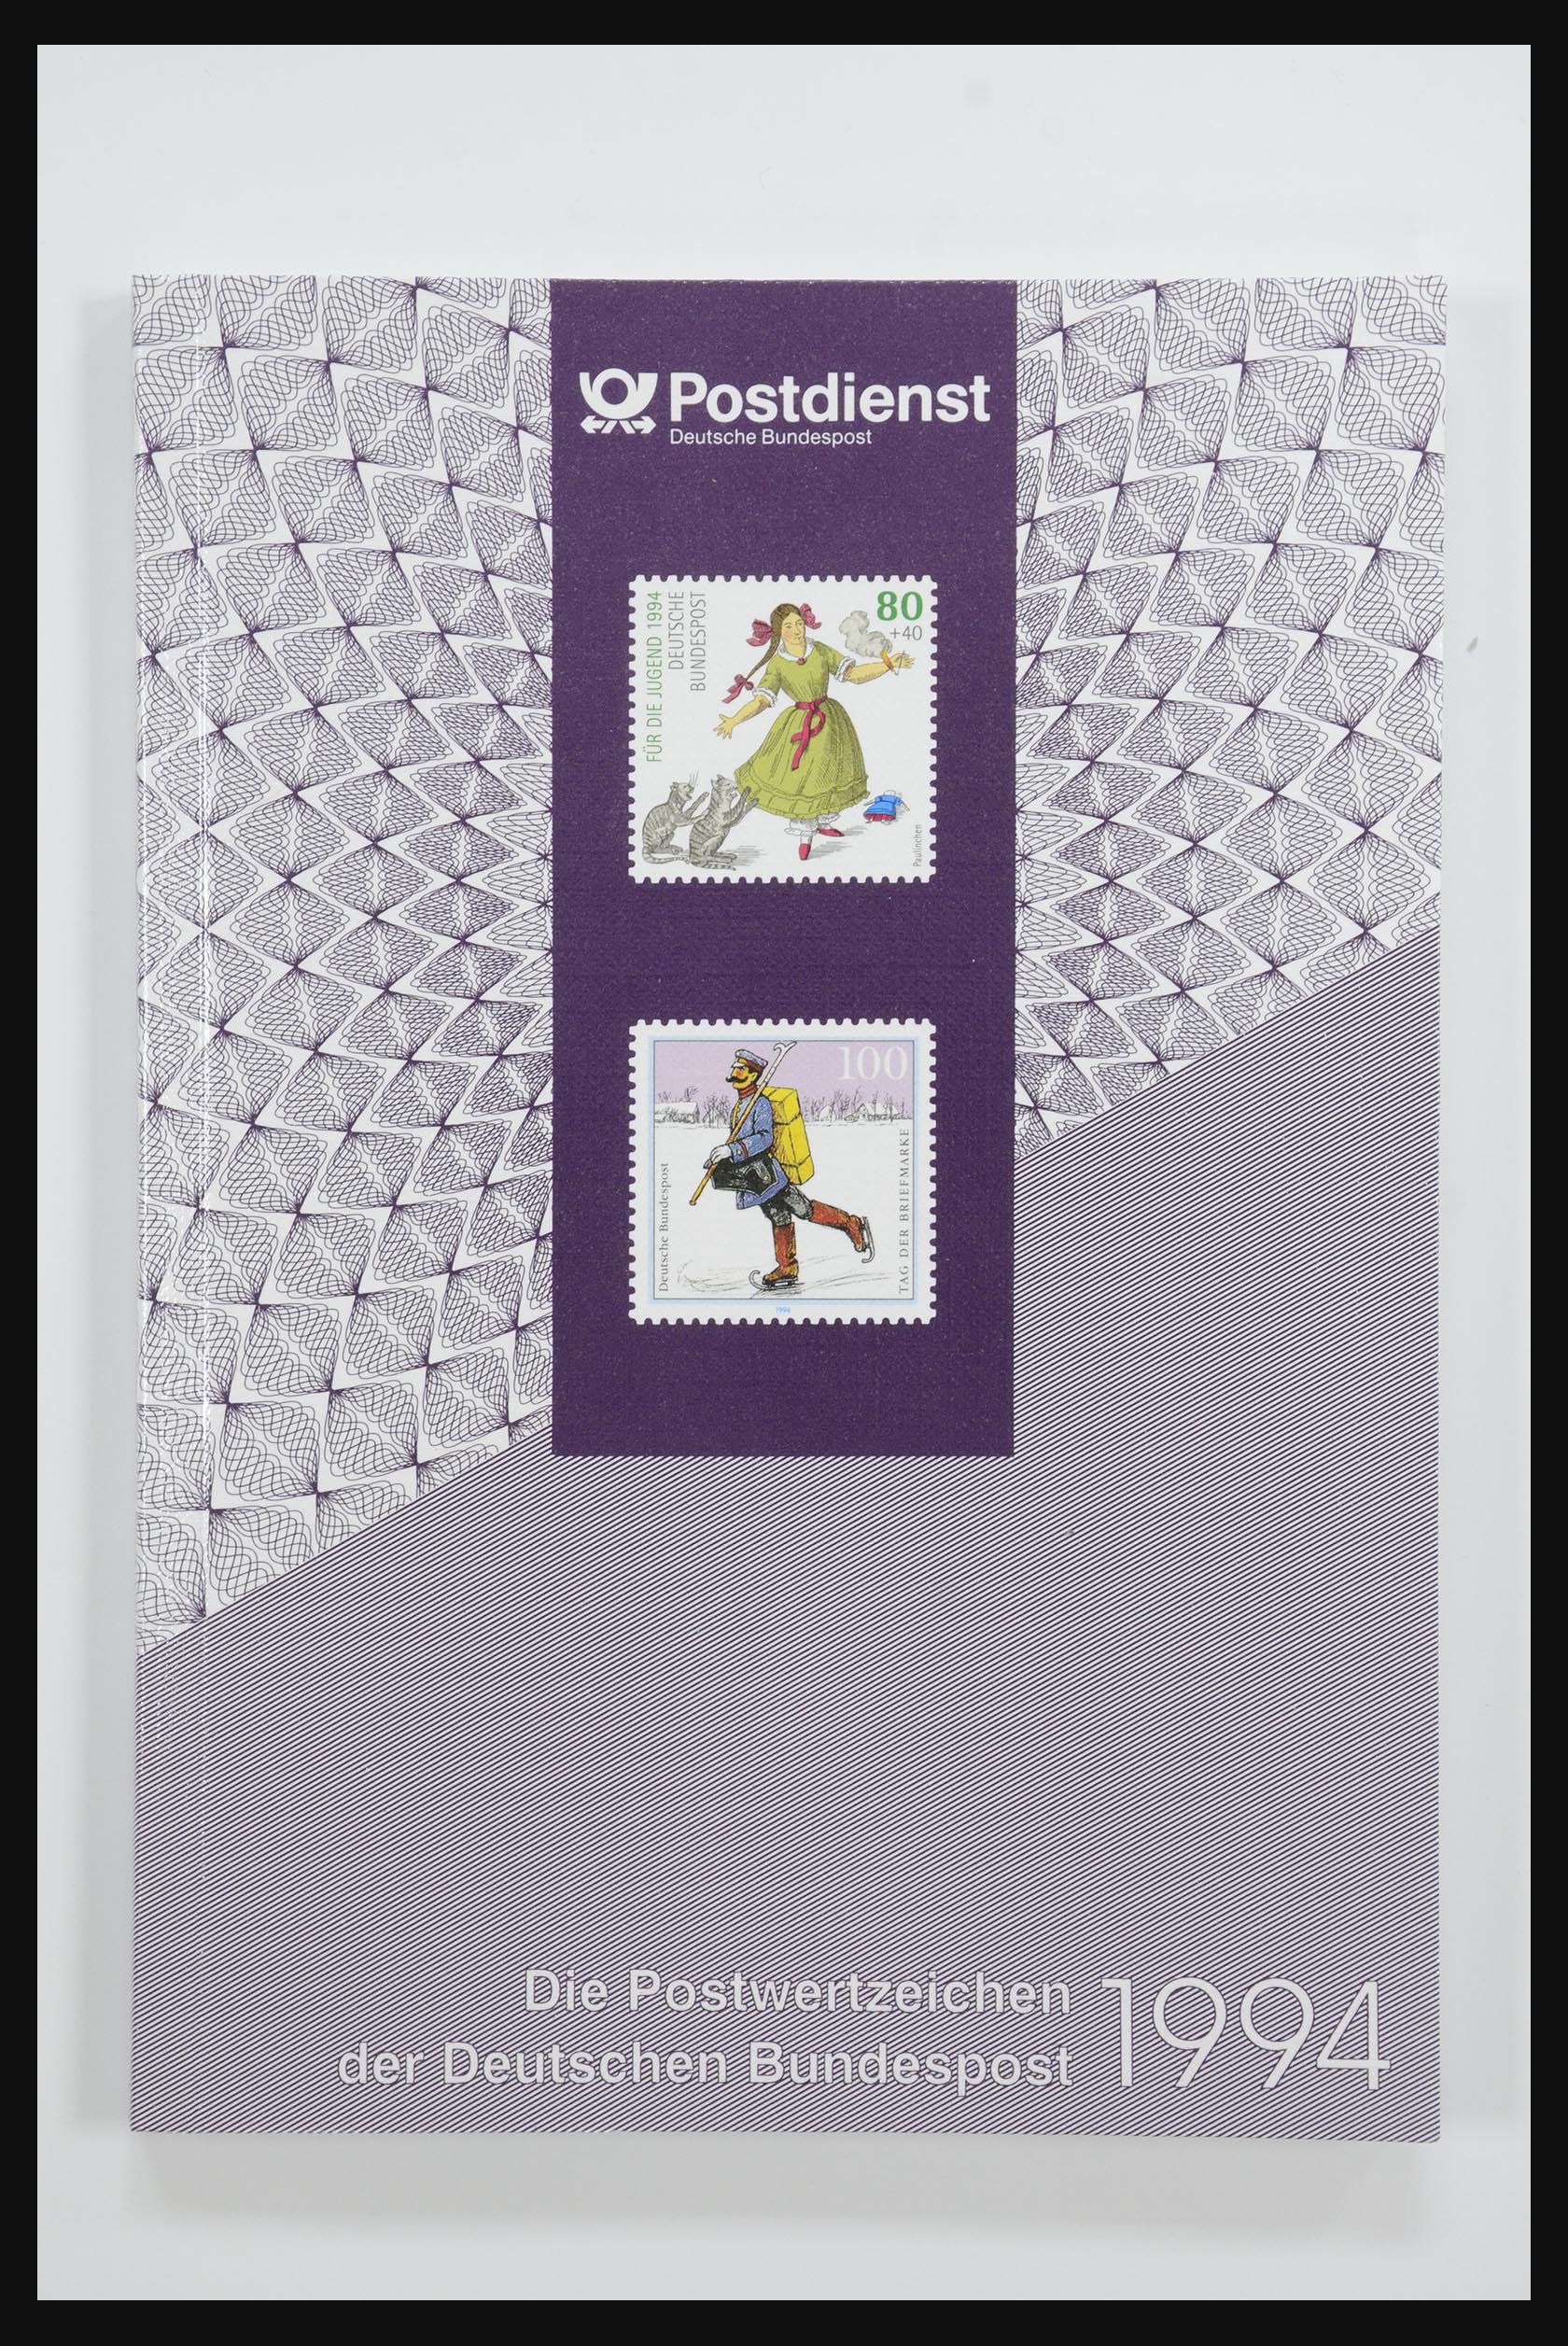 31836 021 - 31836 Bundespost yearbooks 1974-1999.